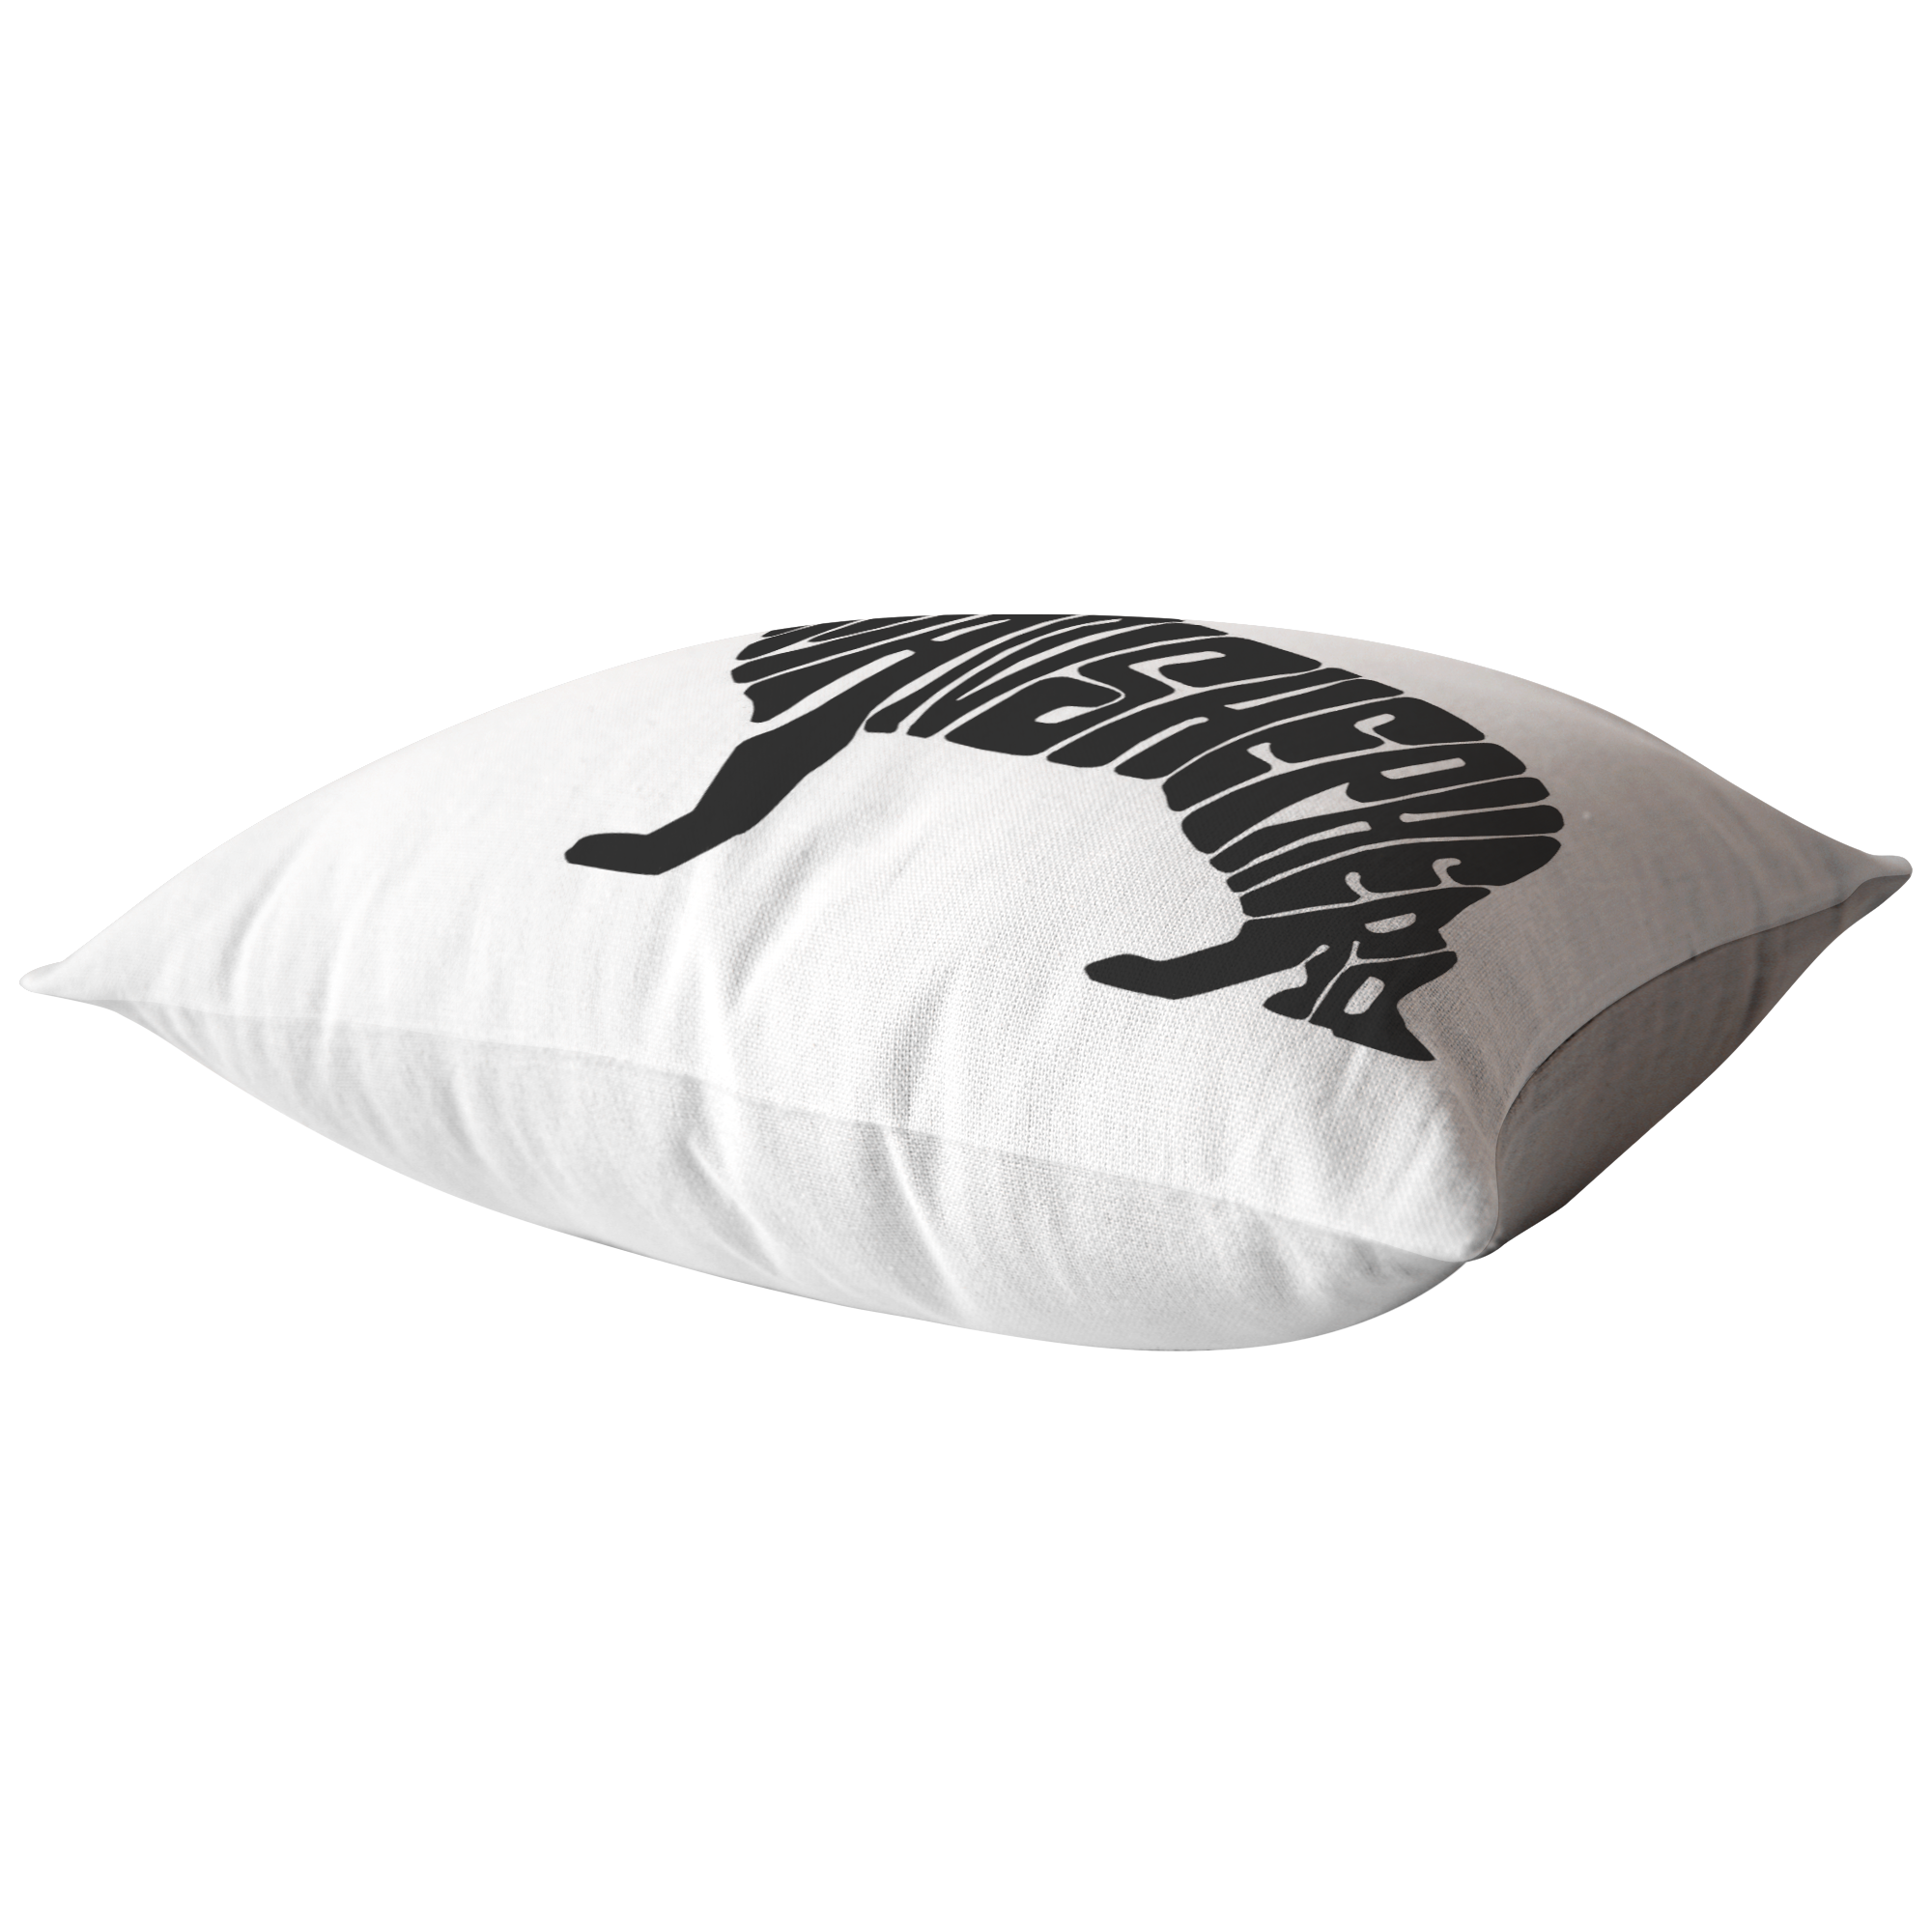 German Shepherd - Pillow